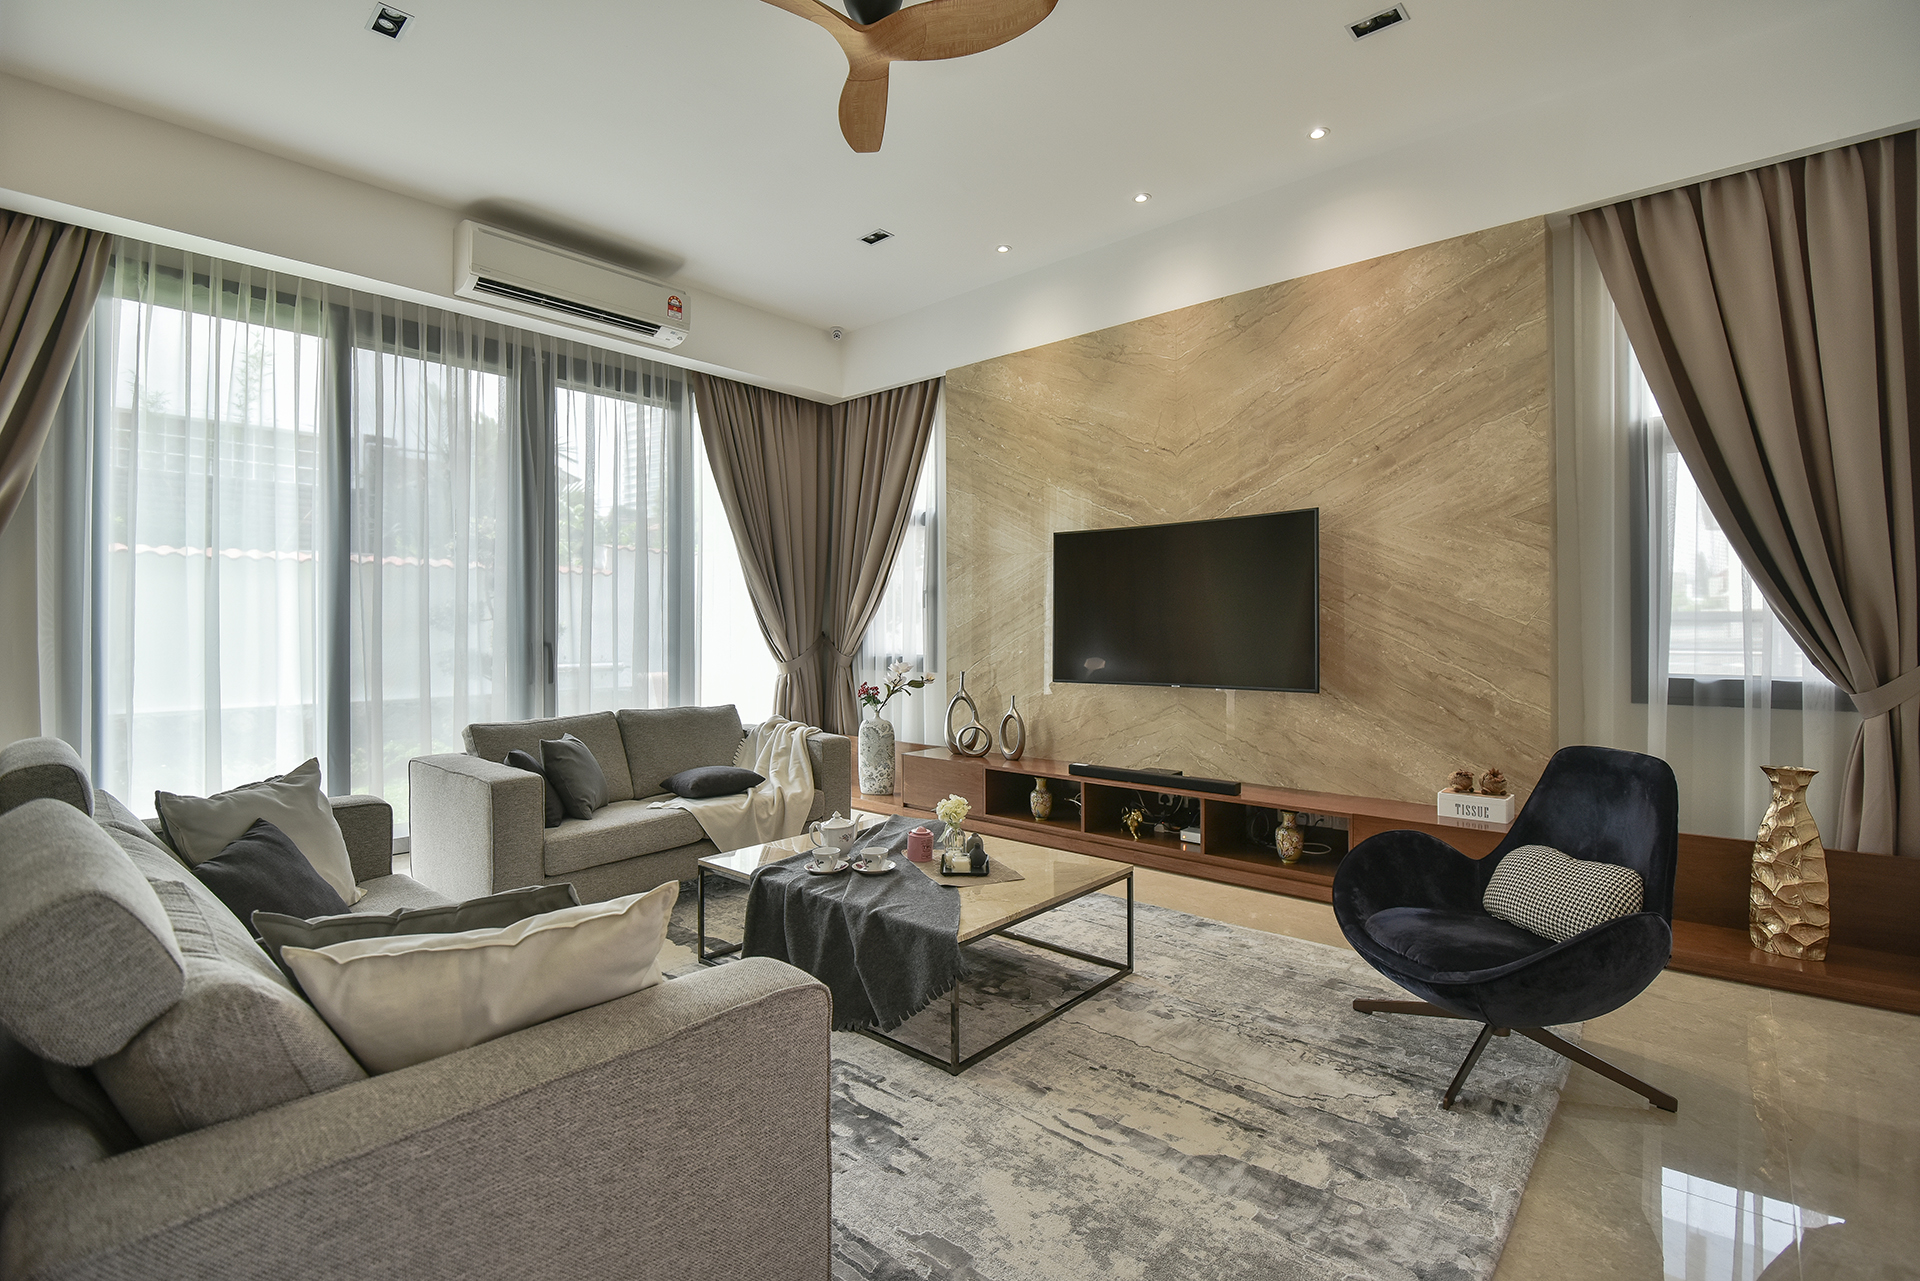 Home | Interior design Malaysia | Best Interior Design | Top 10